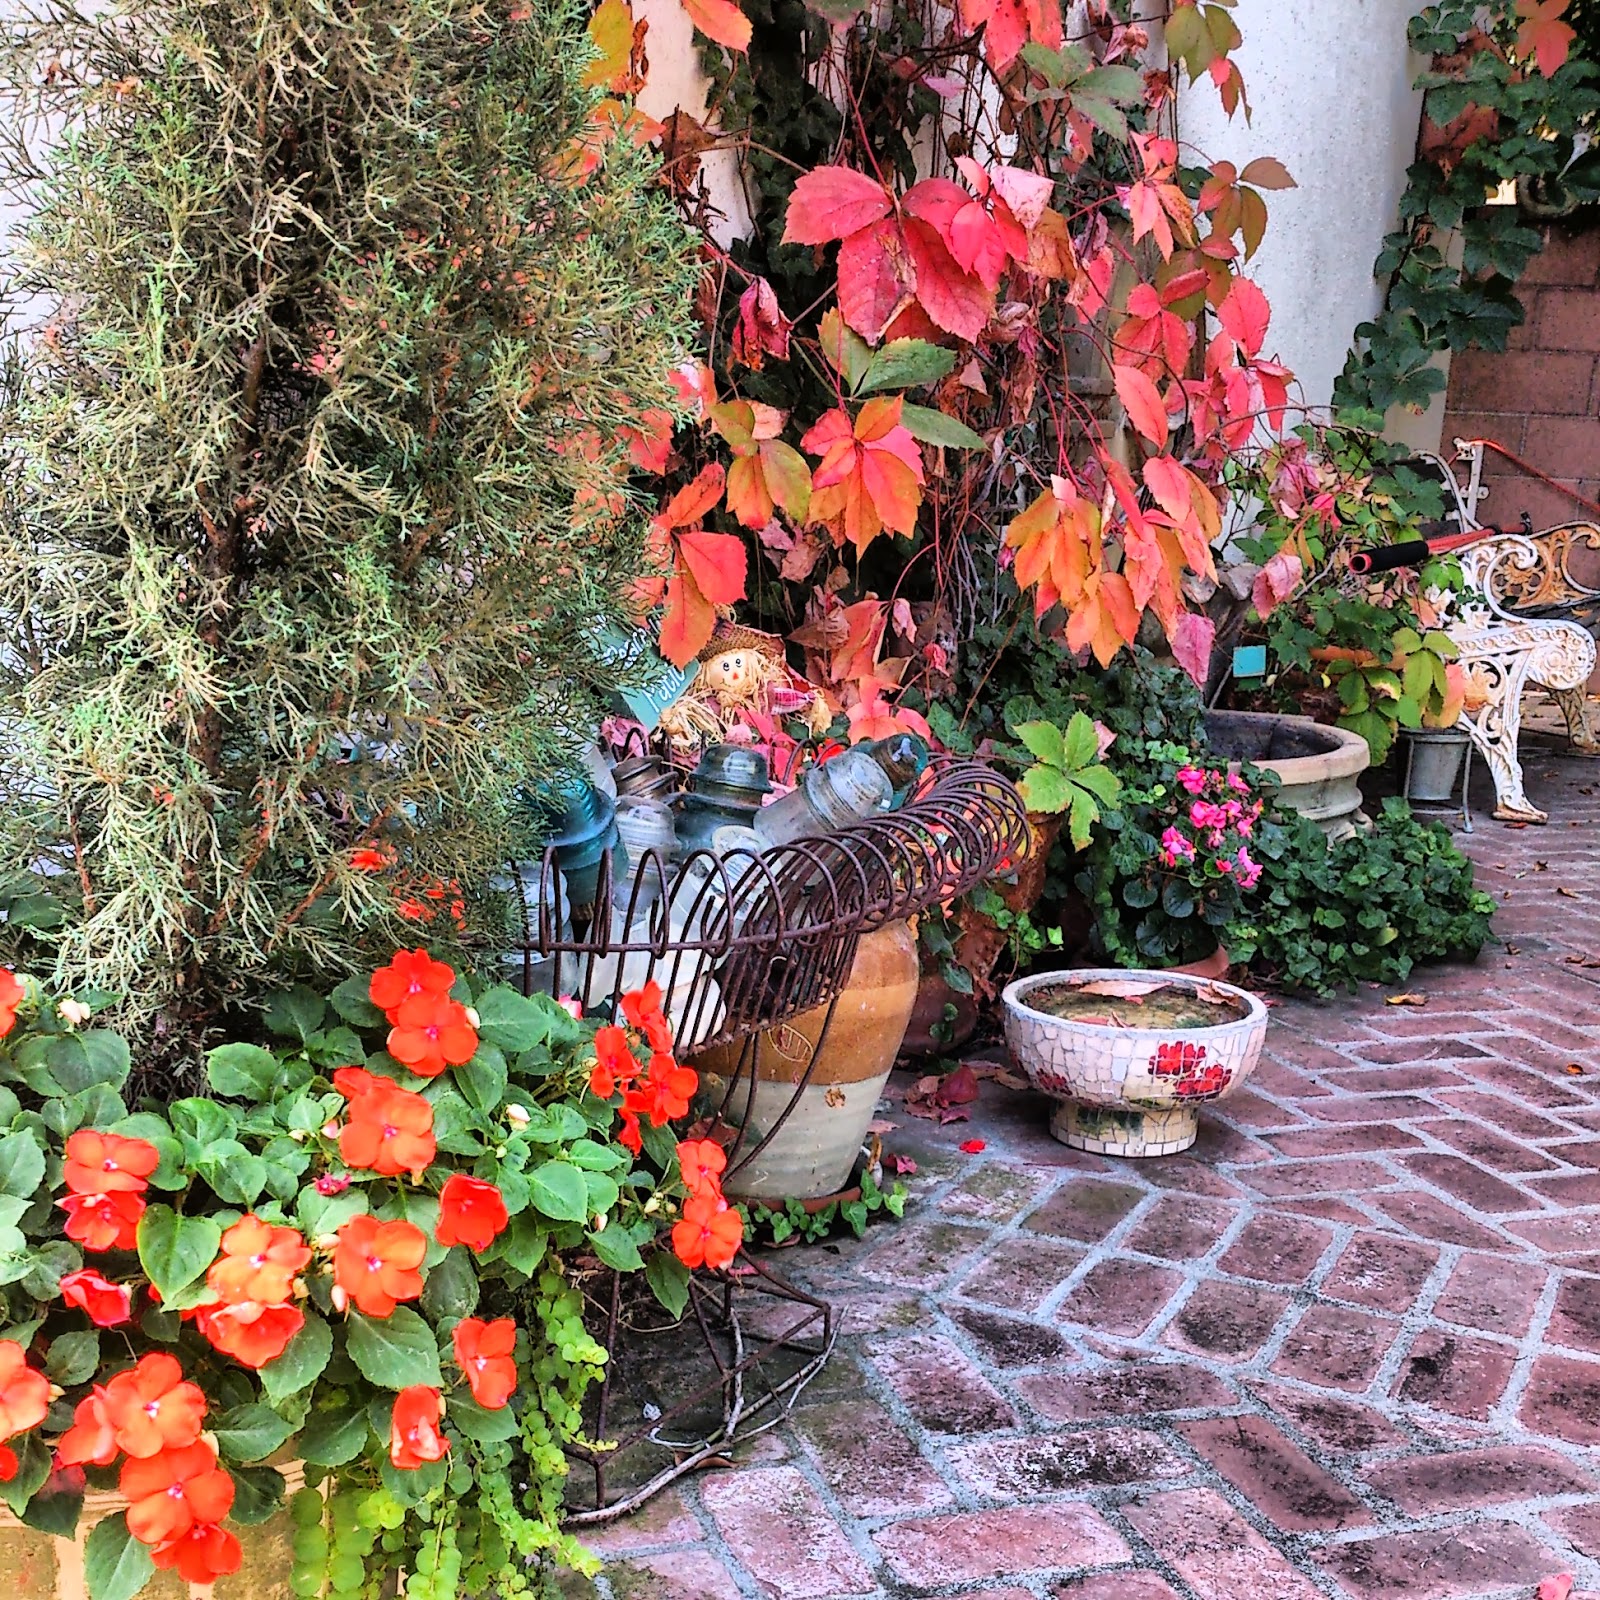 Sunny Simple Life: Pumpkins, Halloween Decor and the Garden